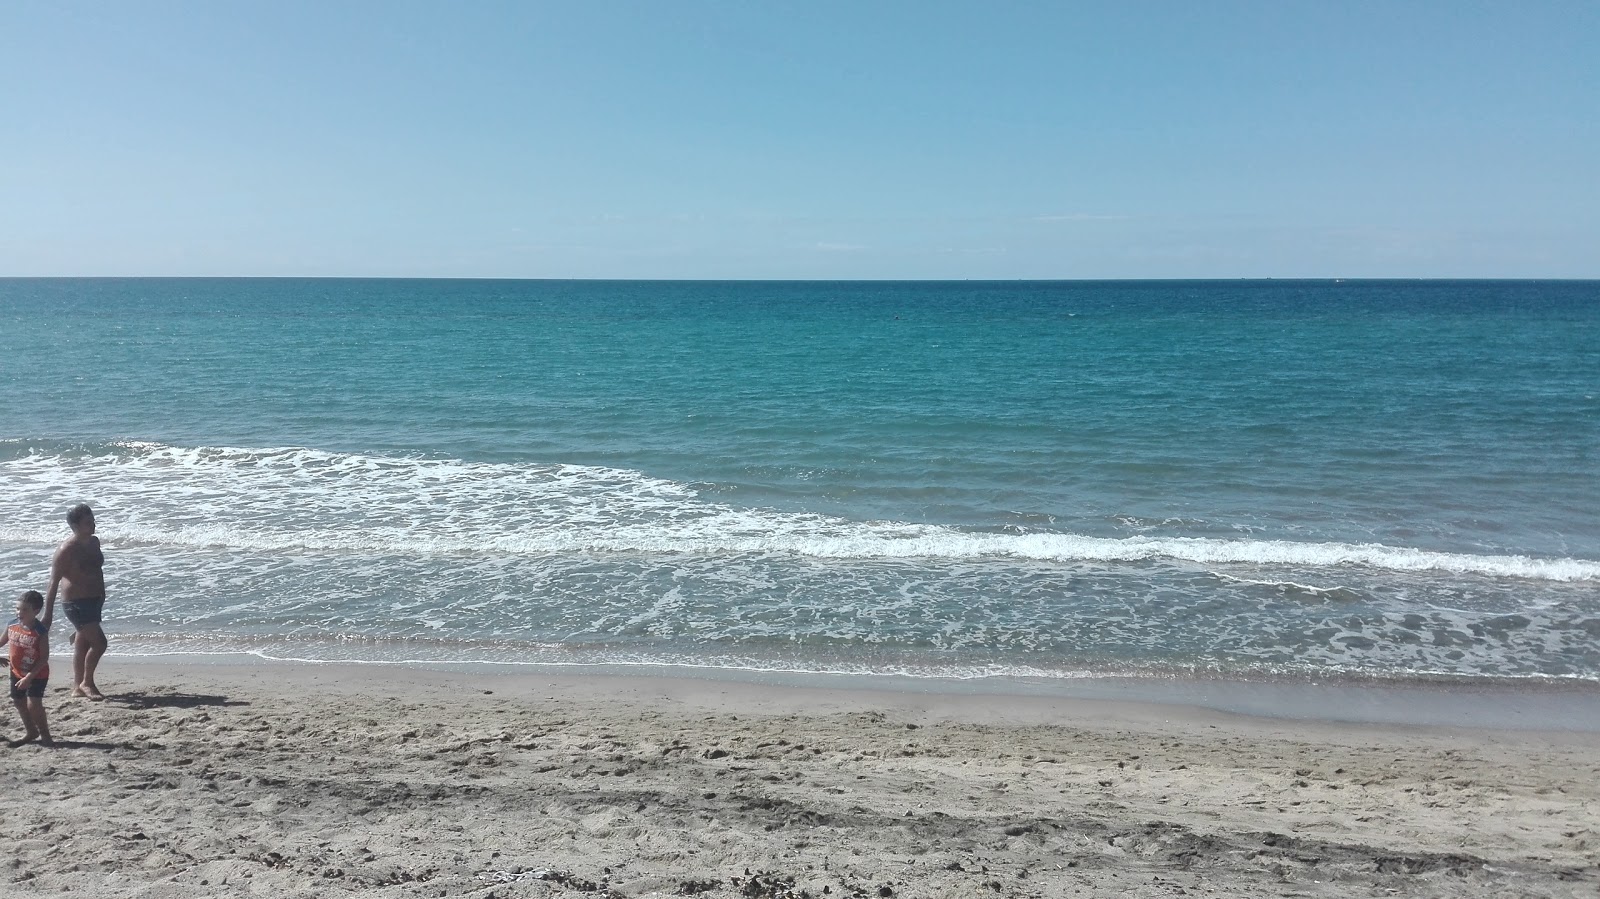 Foto de Marina di Ascea beach II - lugar popular entre os apreciadores de relaxamento